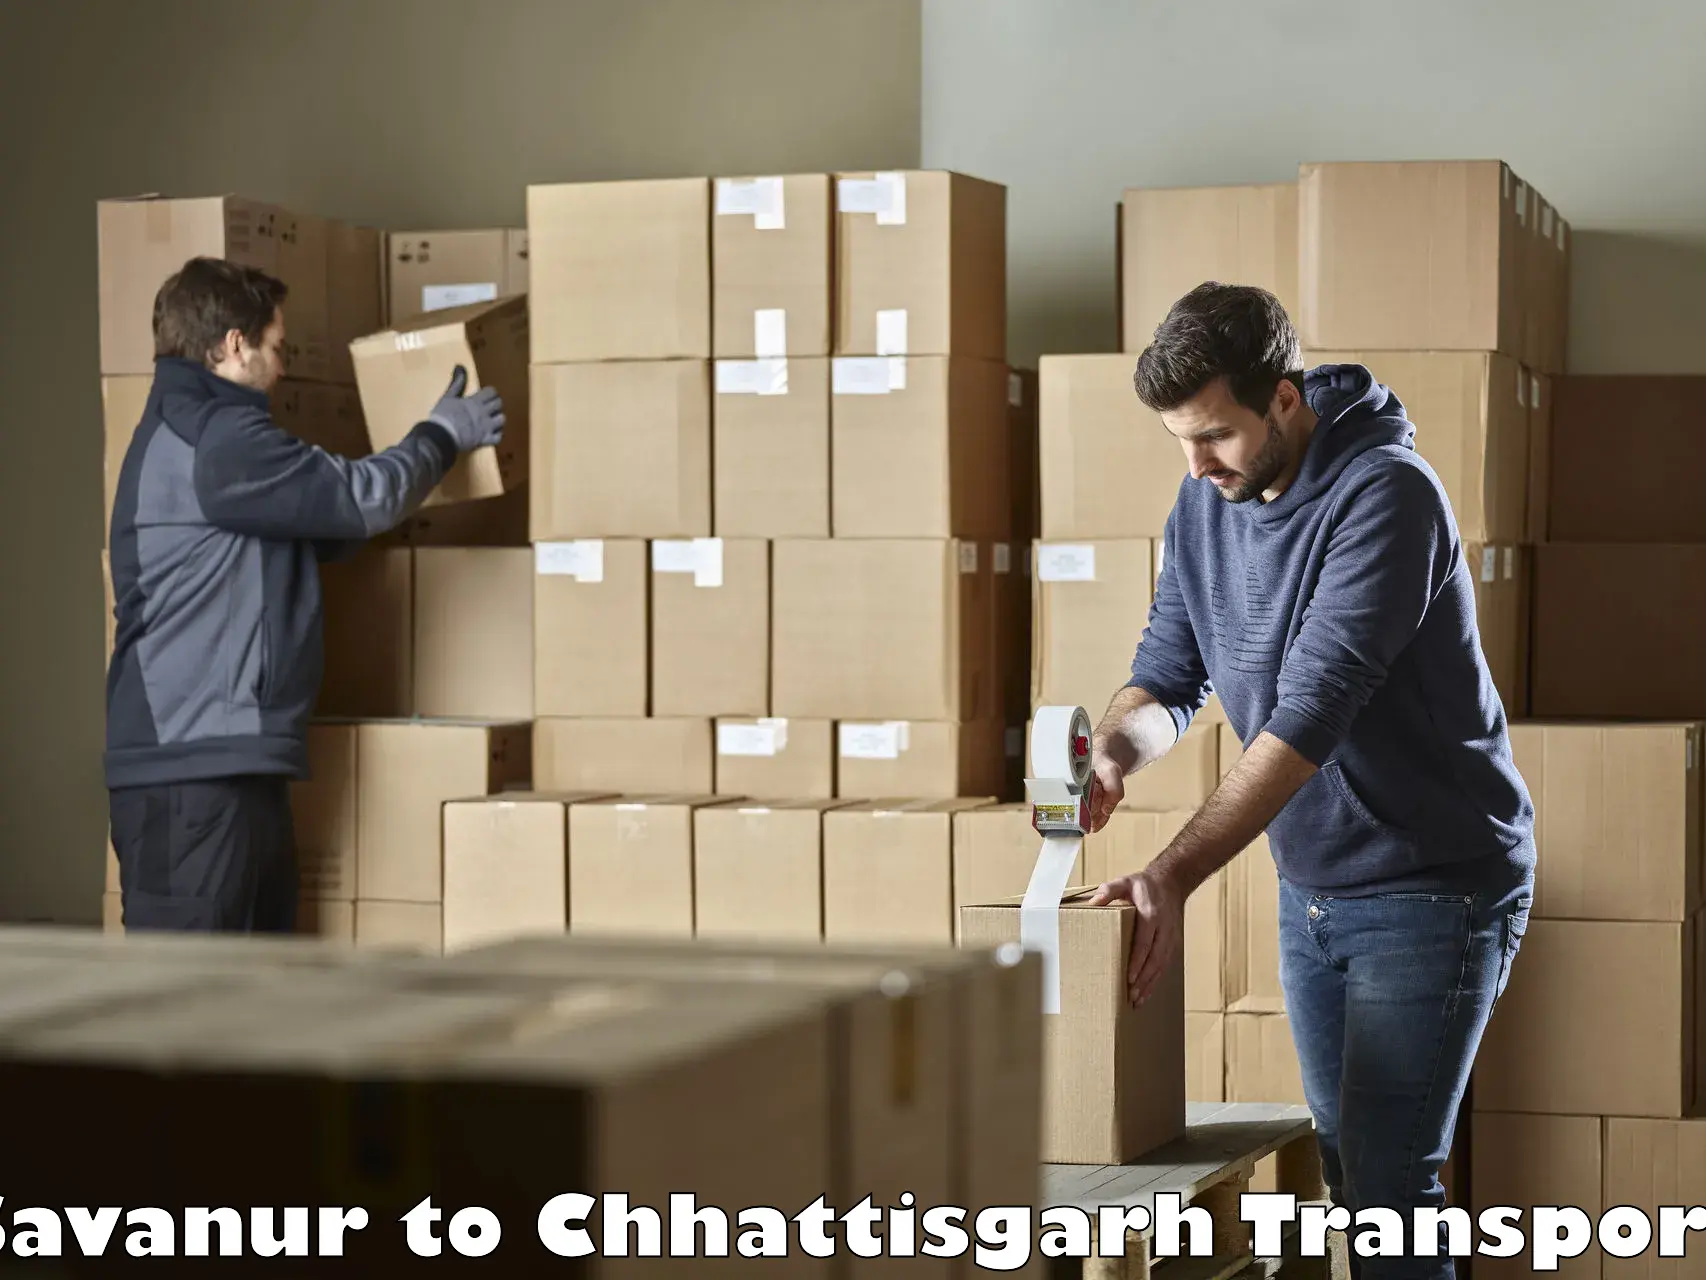 Truck transport companies in India Savanur to Raigarh